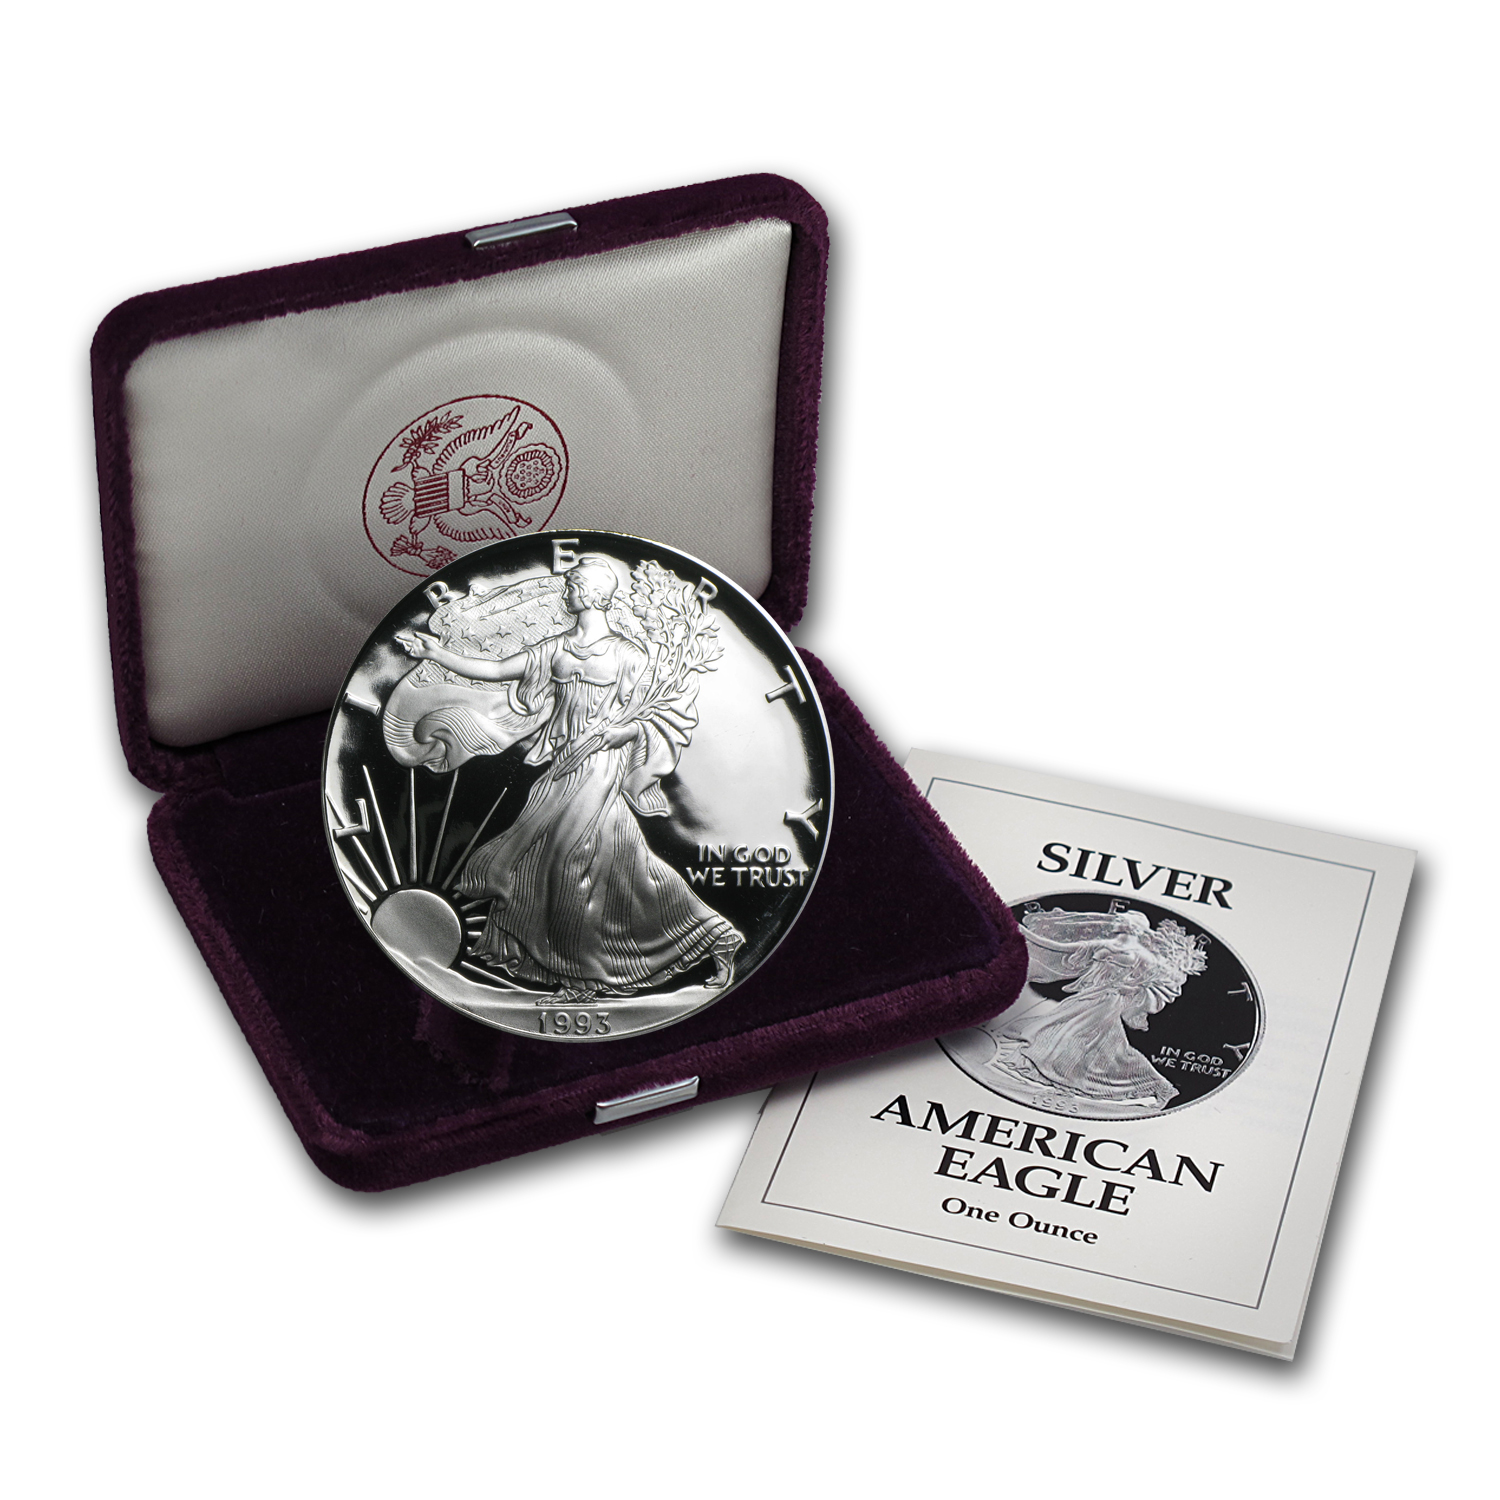 1993 p. American Eagle монета в коробке. Presentation Case (Silver).